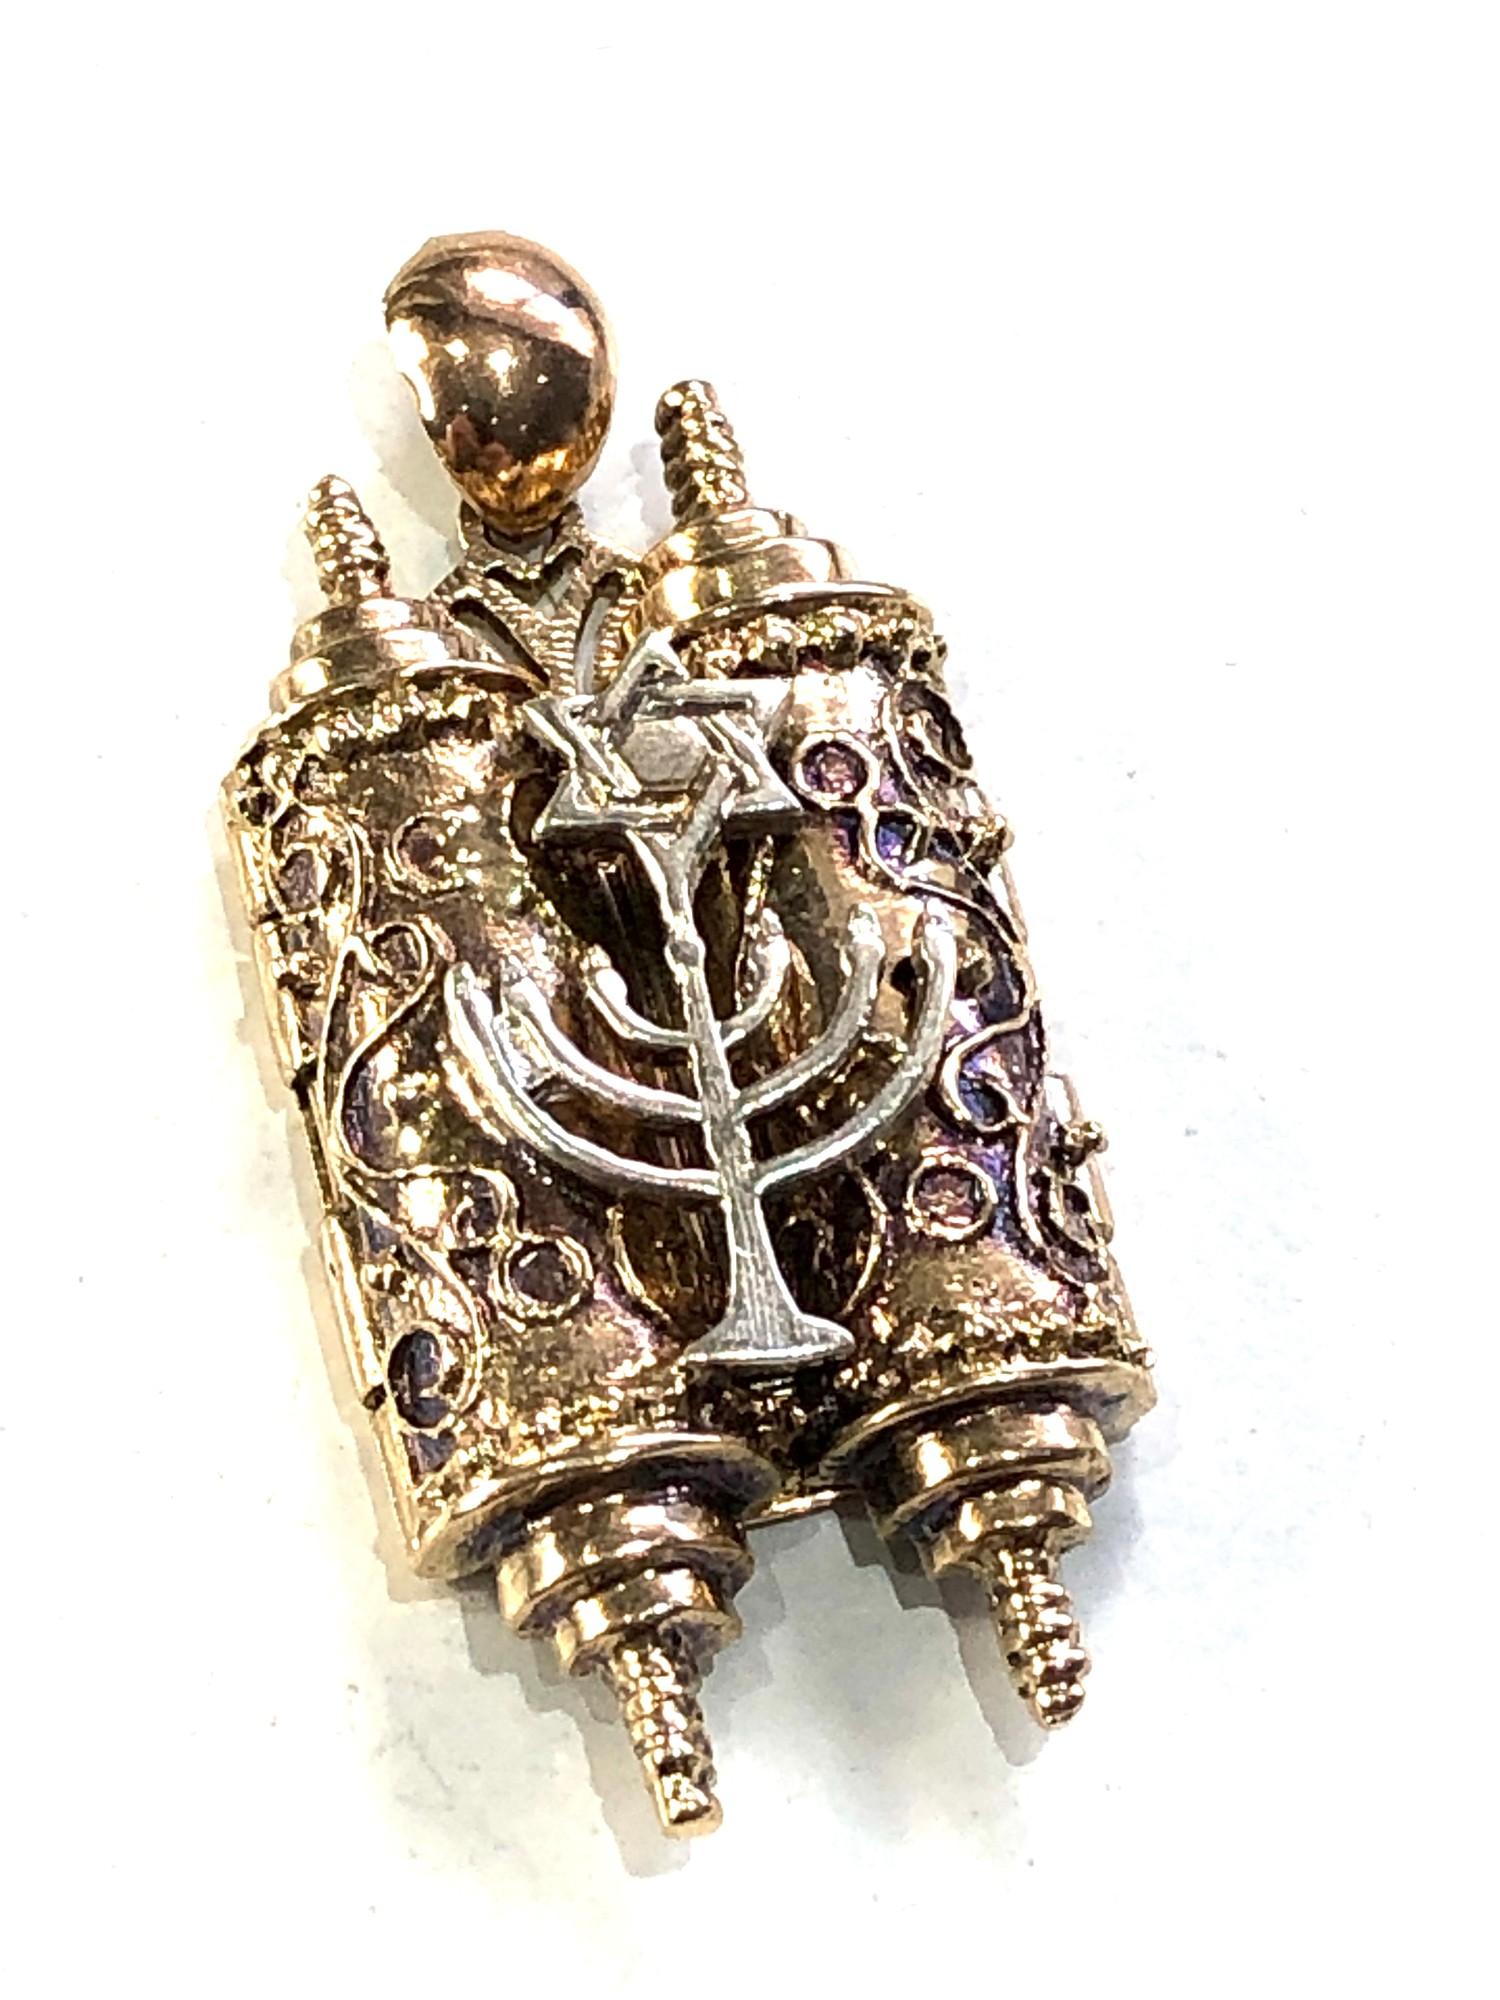 Heavy 9ct gold ornate Jewish pendant weight 15.3g